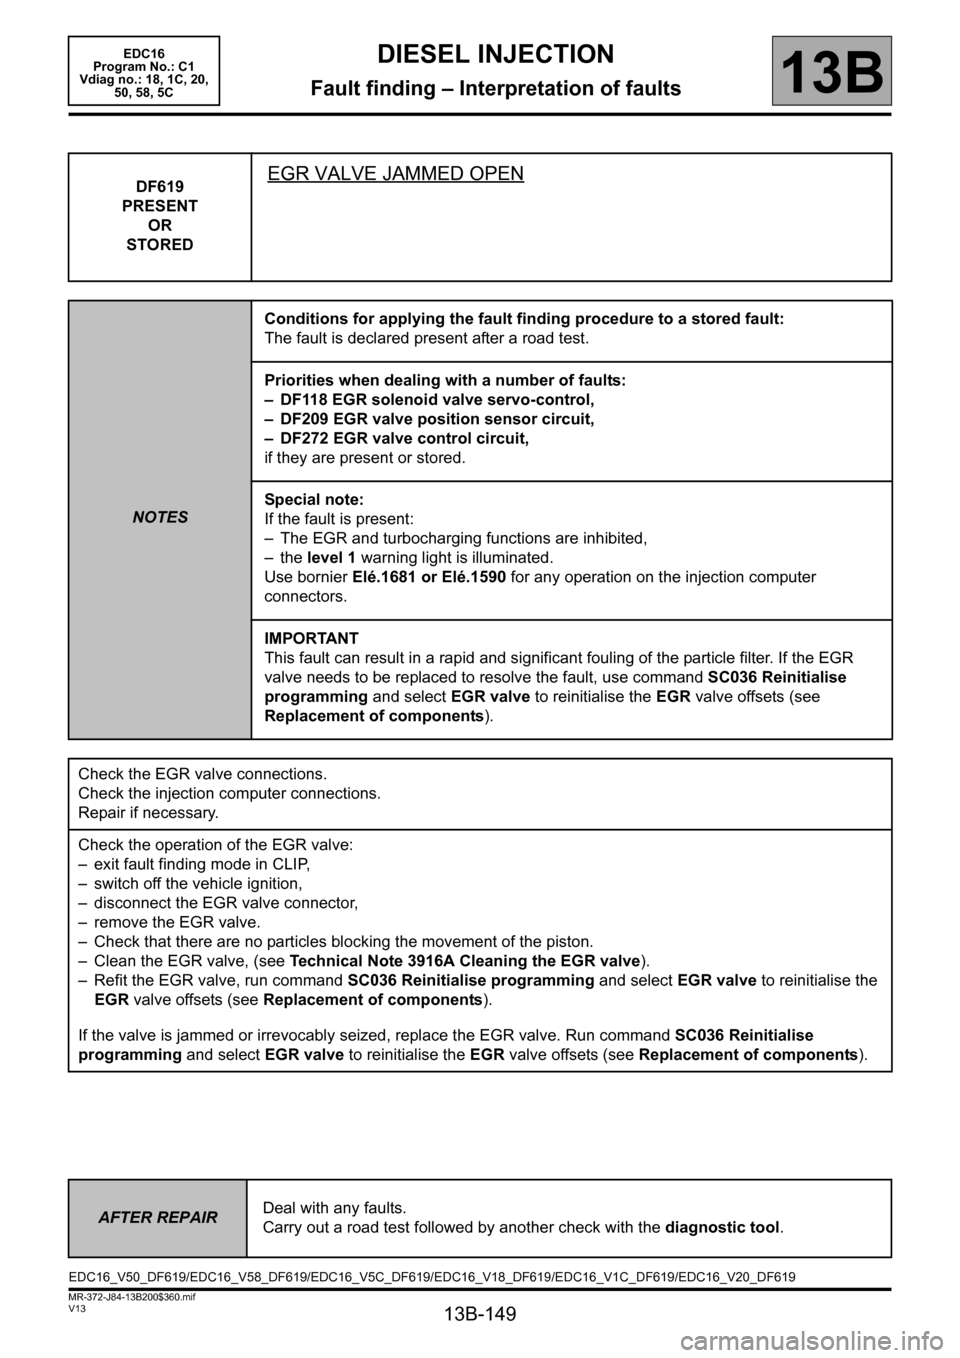 RENAULT SCENIC 2011 J95 / 3.G Engine And Peripherals EDC16 Workshop Manual 13B-149
MR-372-J84-13B200$360.mif
V13
DIESEL INJECTION
Fault finding – Interpretation of faults
EDC16  
Program No.: C1 
Vdiag no.: 18, 1C, 20,  
50, 58, 5C
13B
DF619
PRESENT
OR
STOREDEGR VALVE JAMM